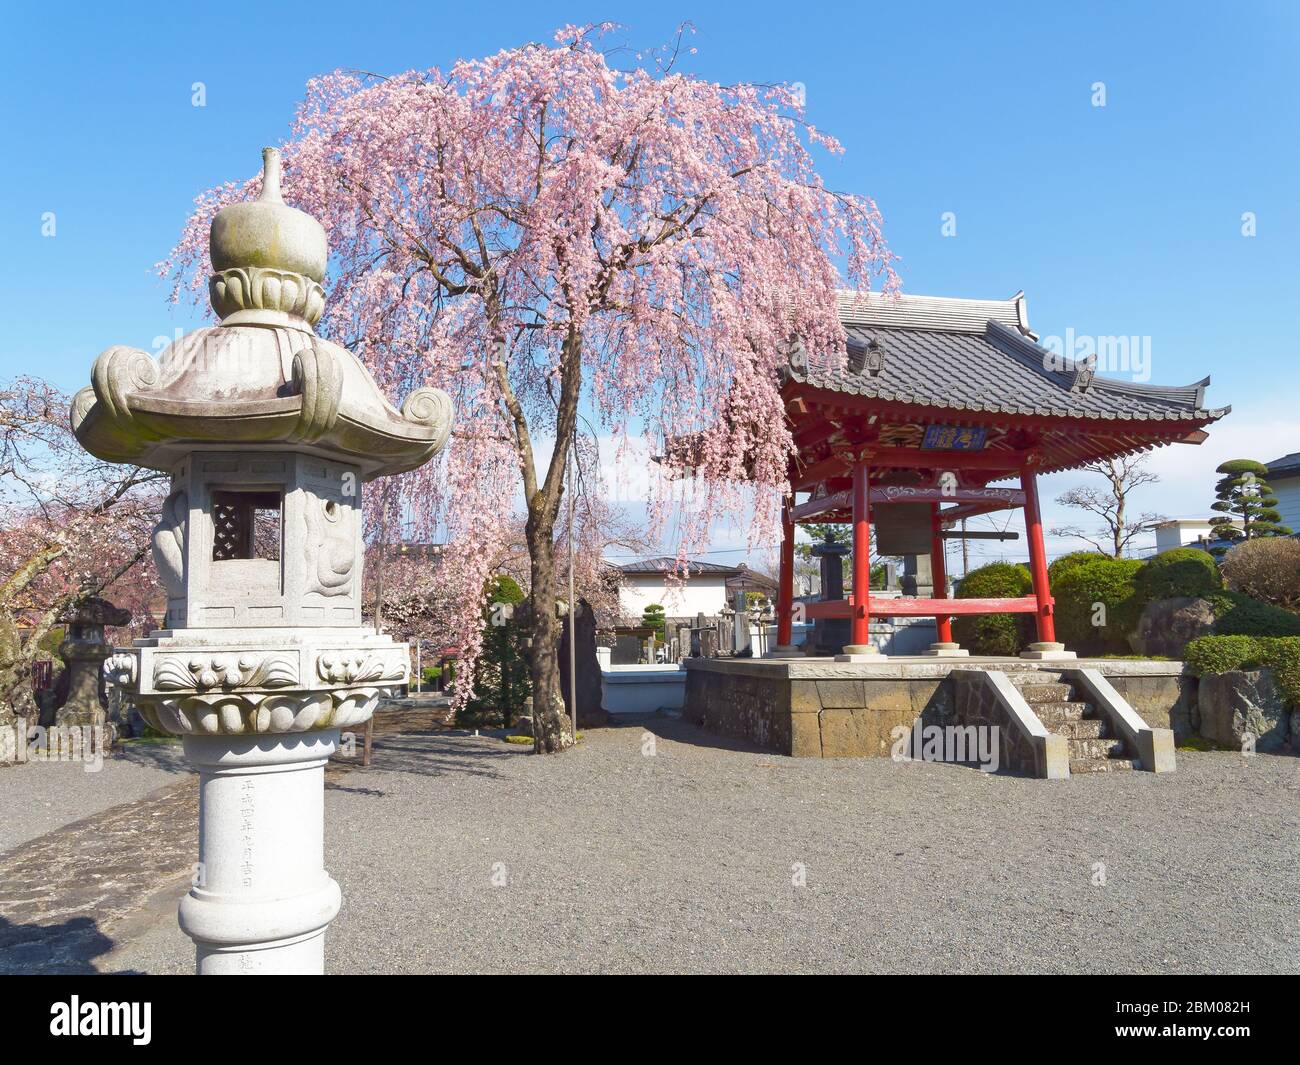 Cherry blossom trees outside a temple in Japan. Jōzaiji Temple, Kawaguchiko, Stock Photo